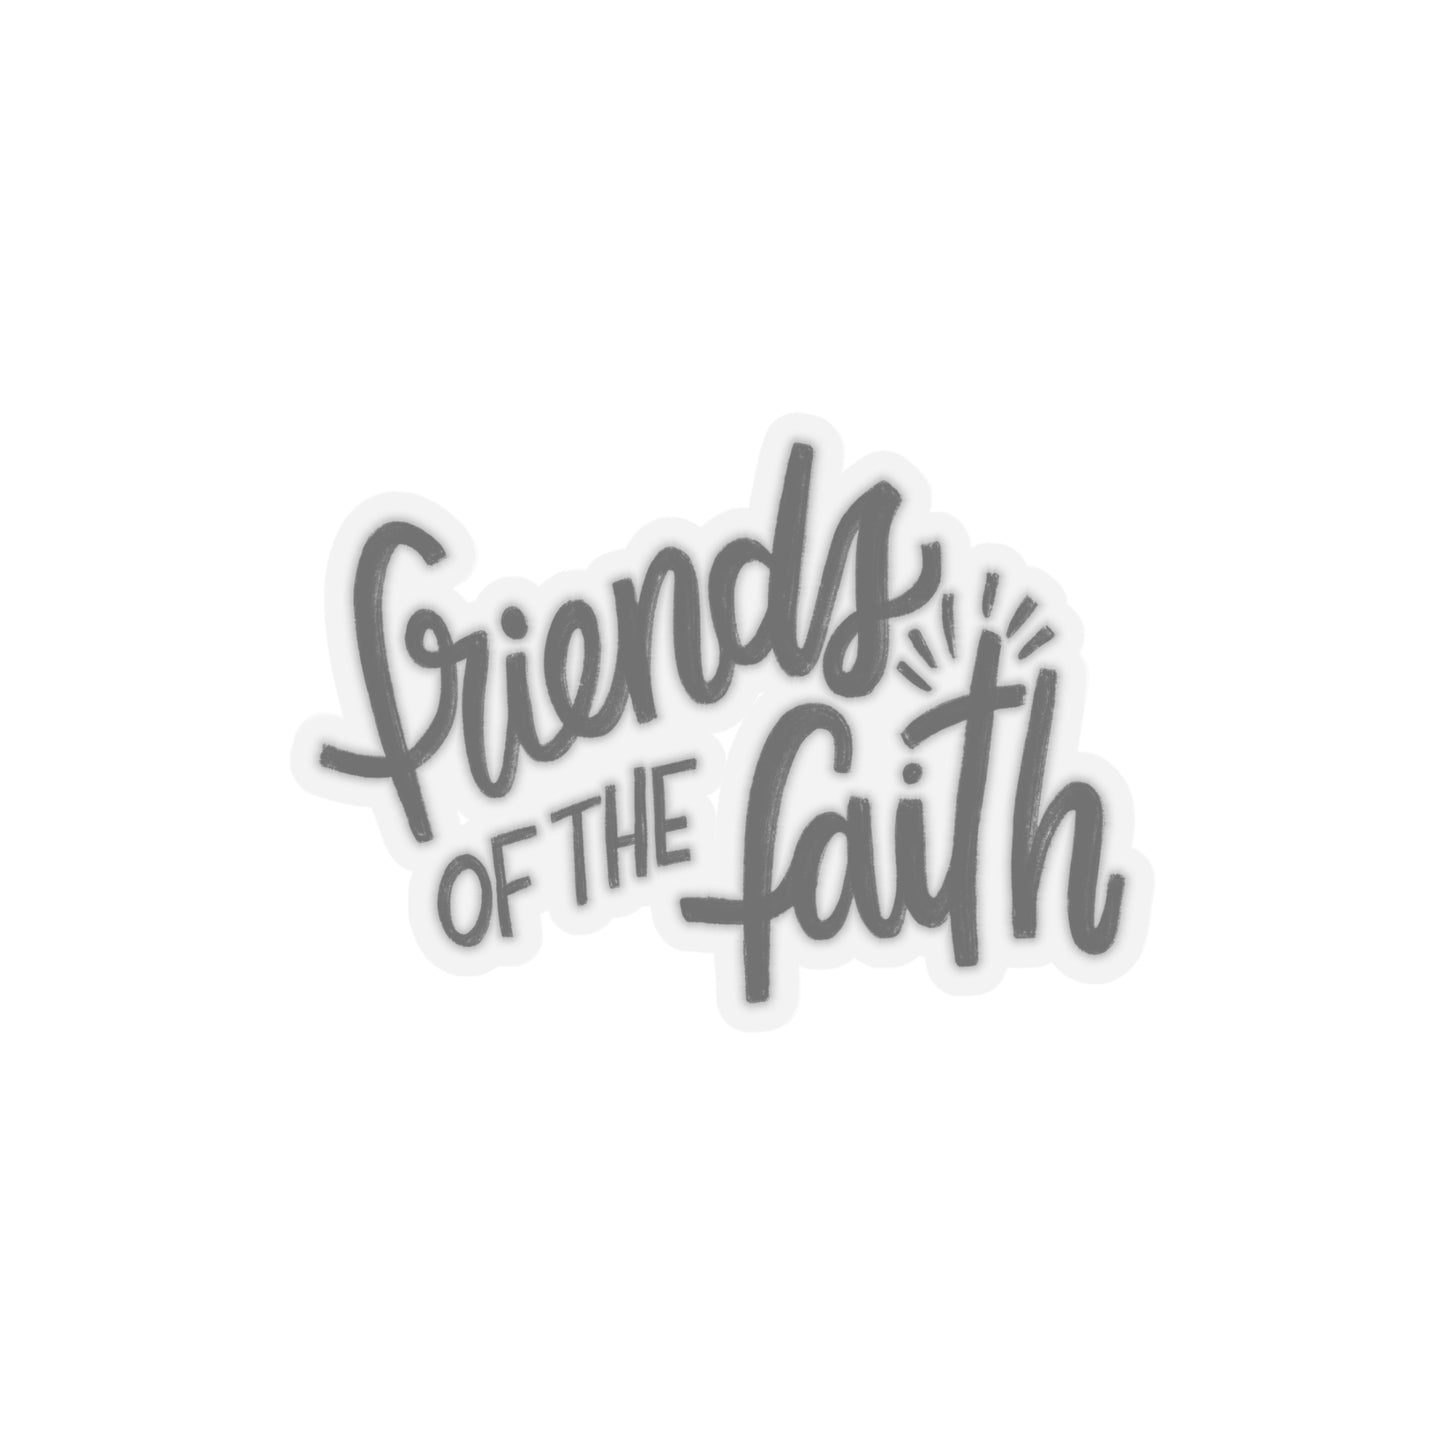 Friends of the Faith Logo Sticker